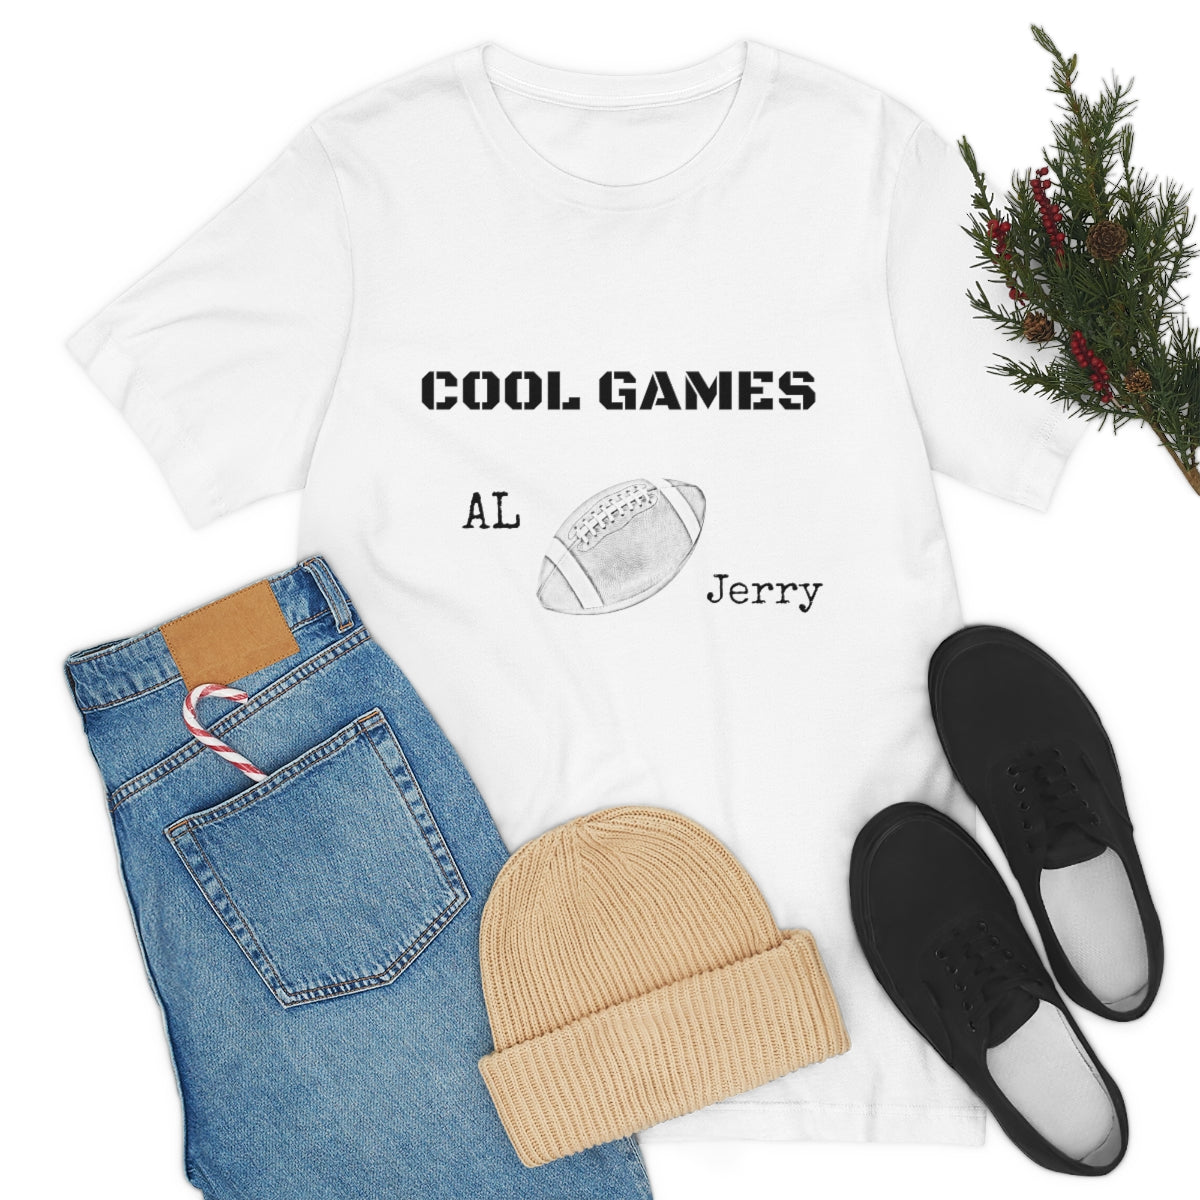 Al & Jerry "Cool Games"  Short Sleeve Tee